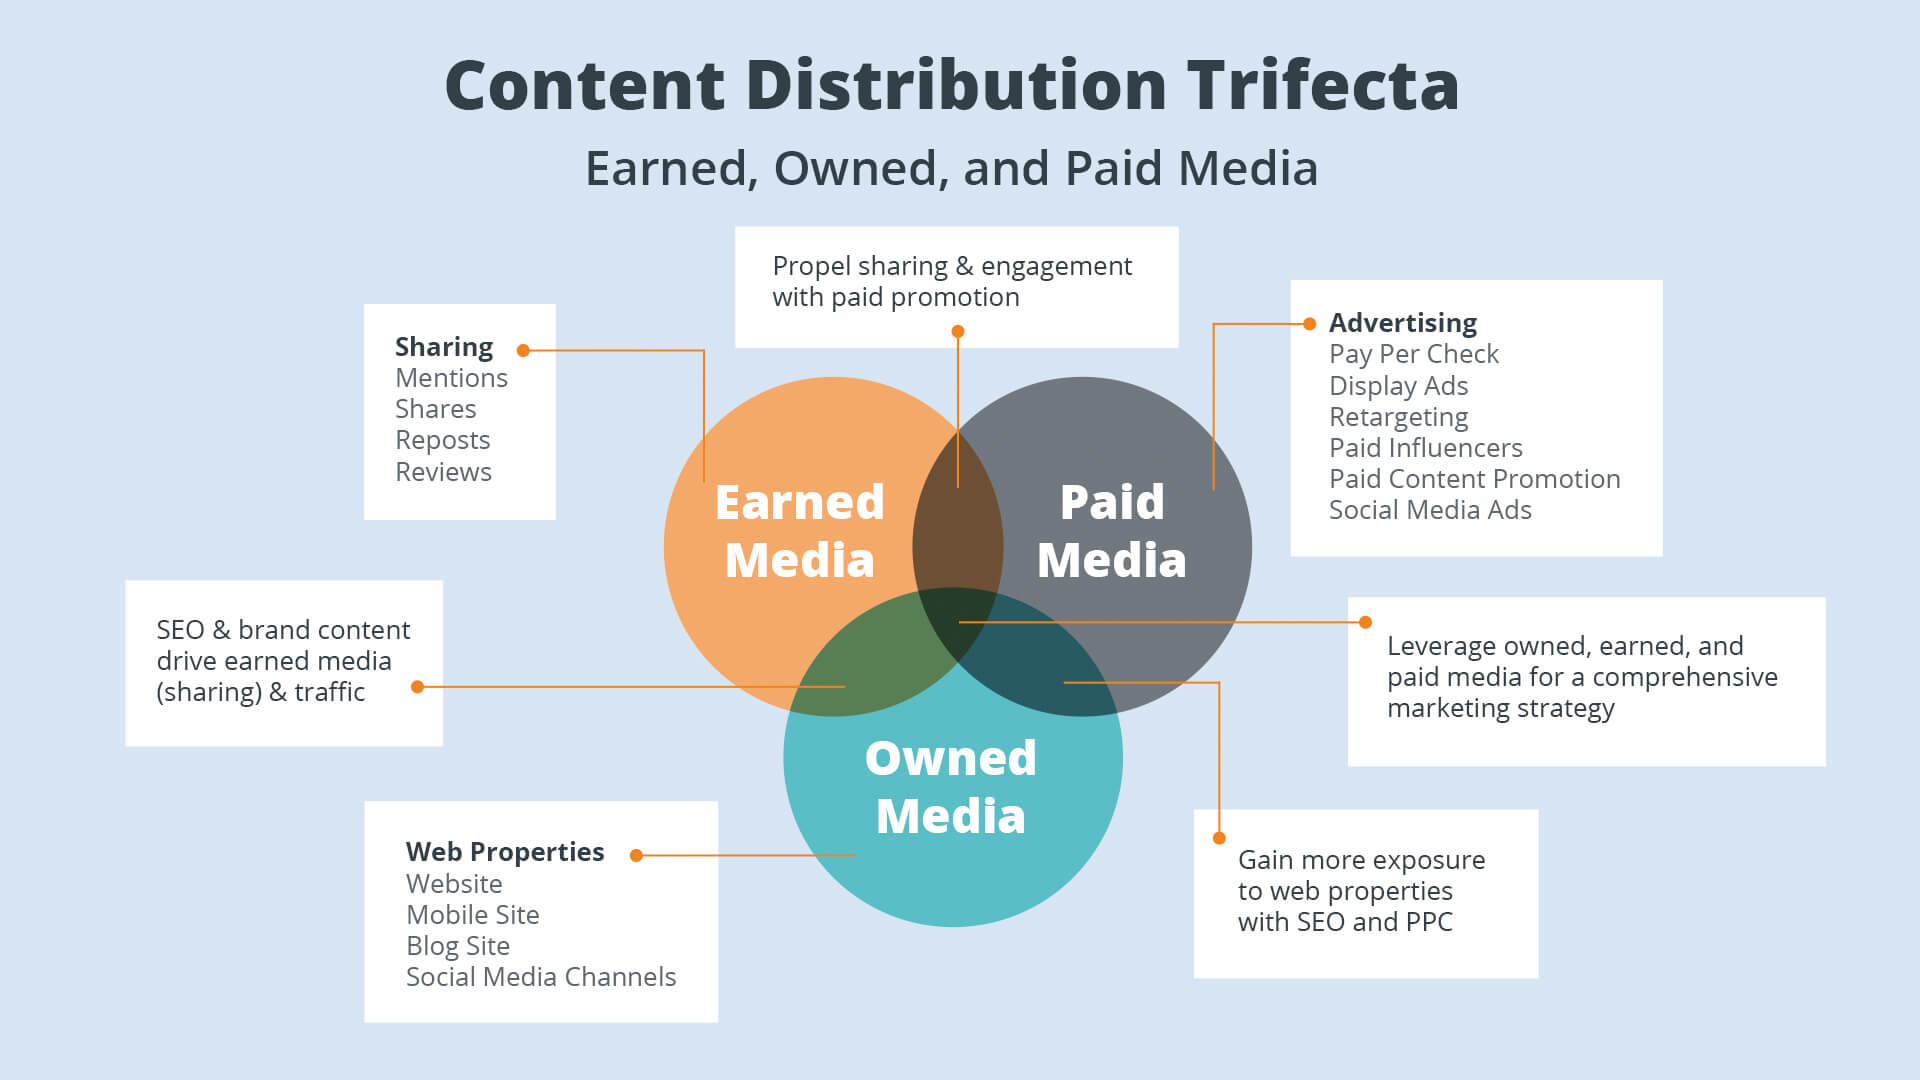 Content Distribution Trifecta